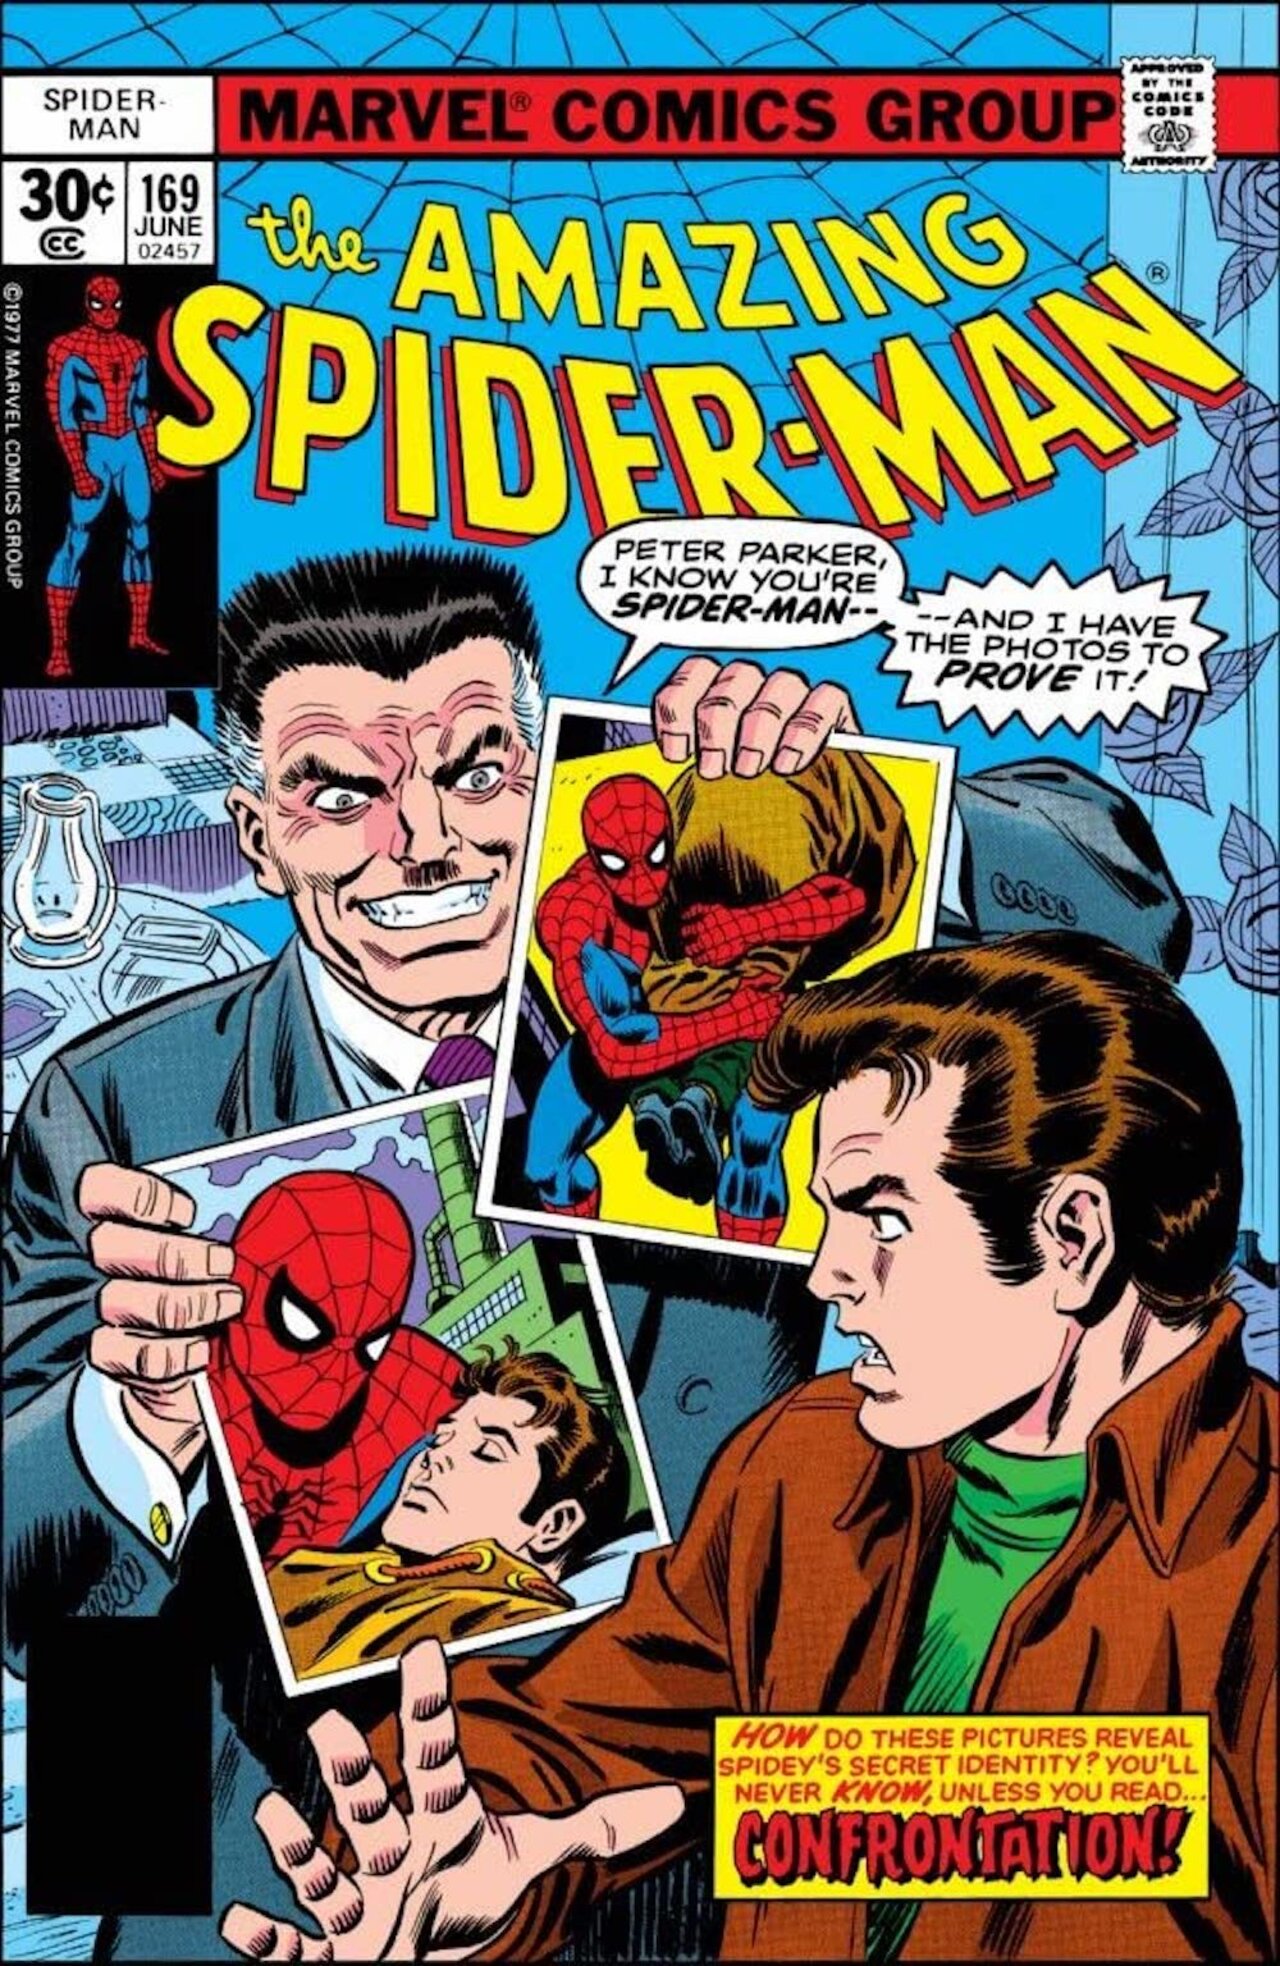 Is J. Jonah Jameson Spider-Man's friend or foe?